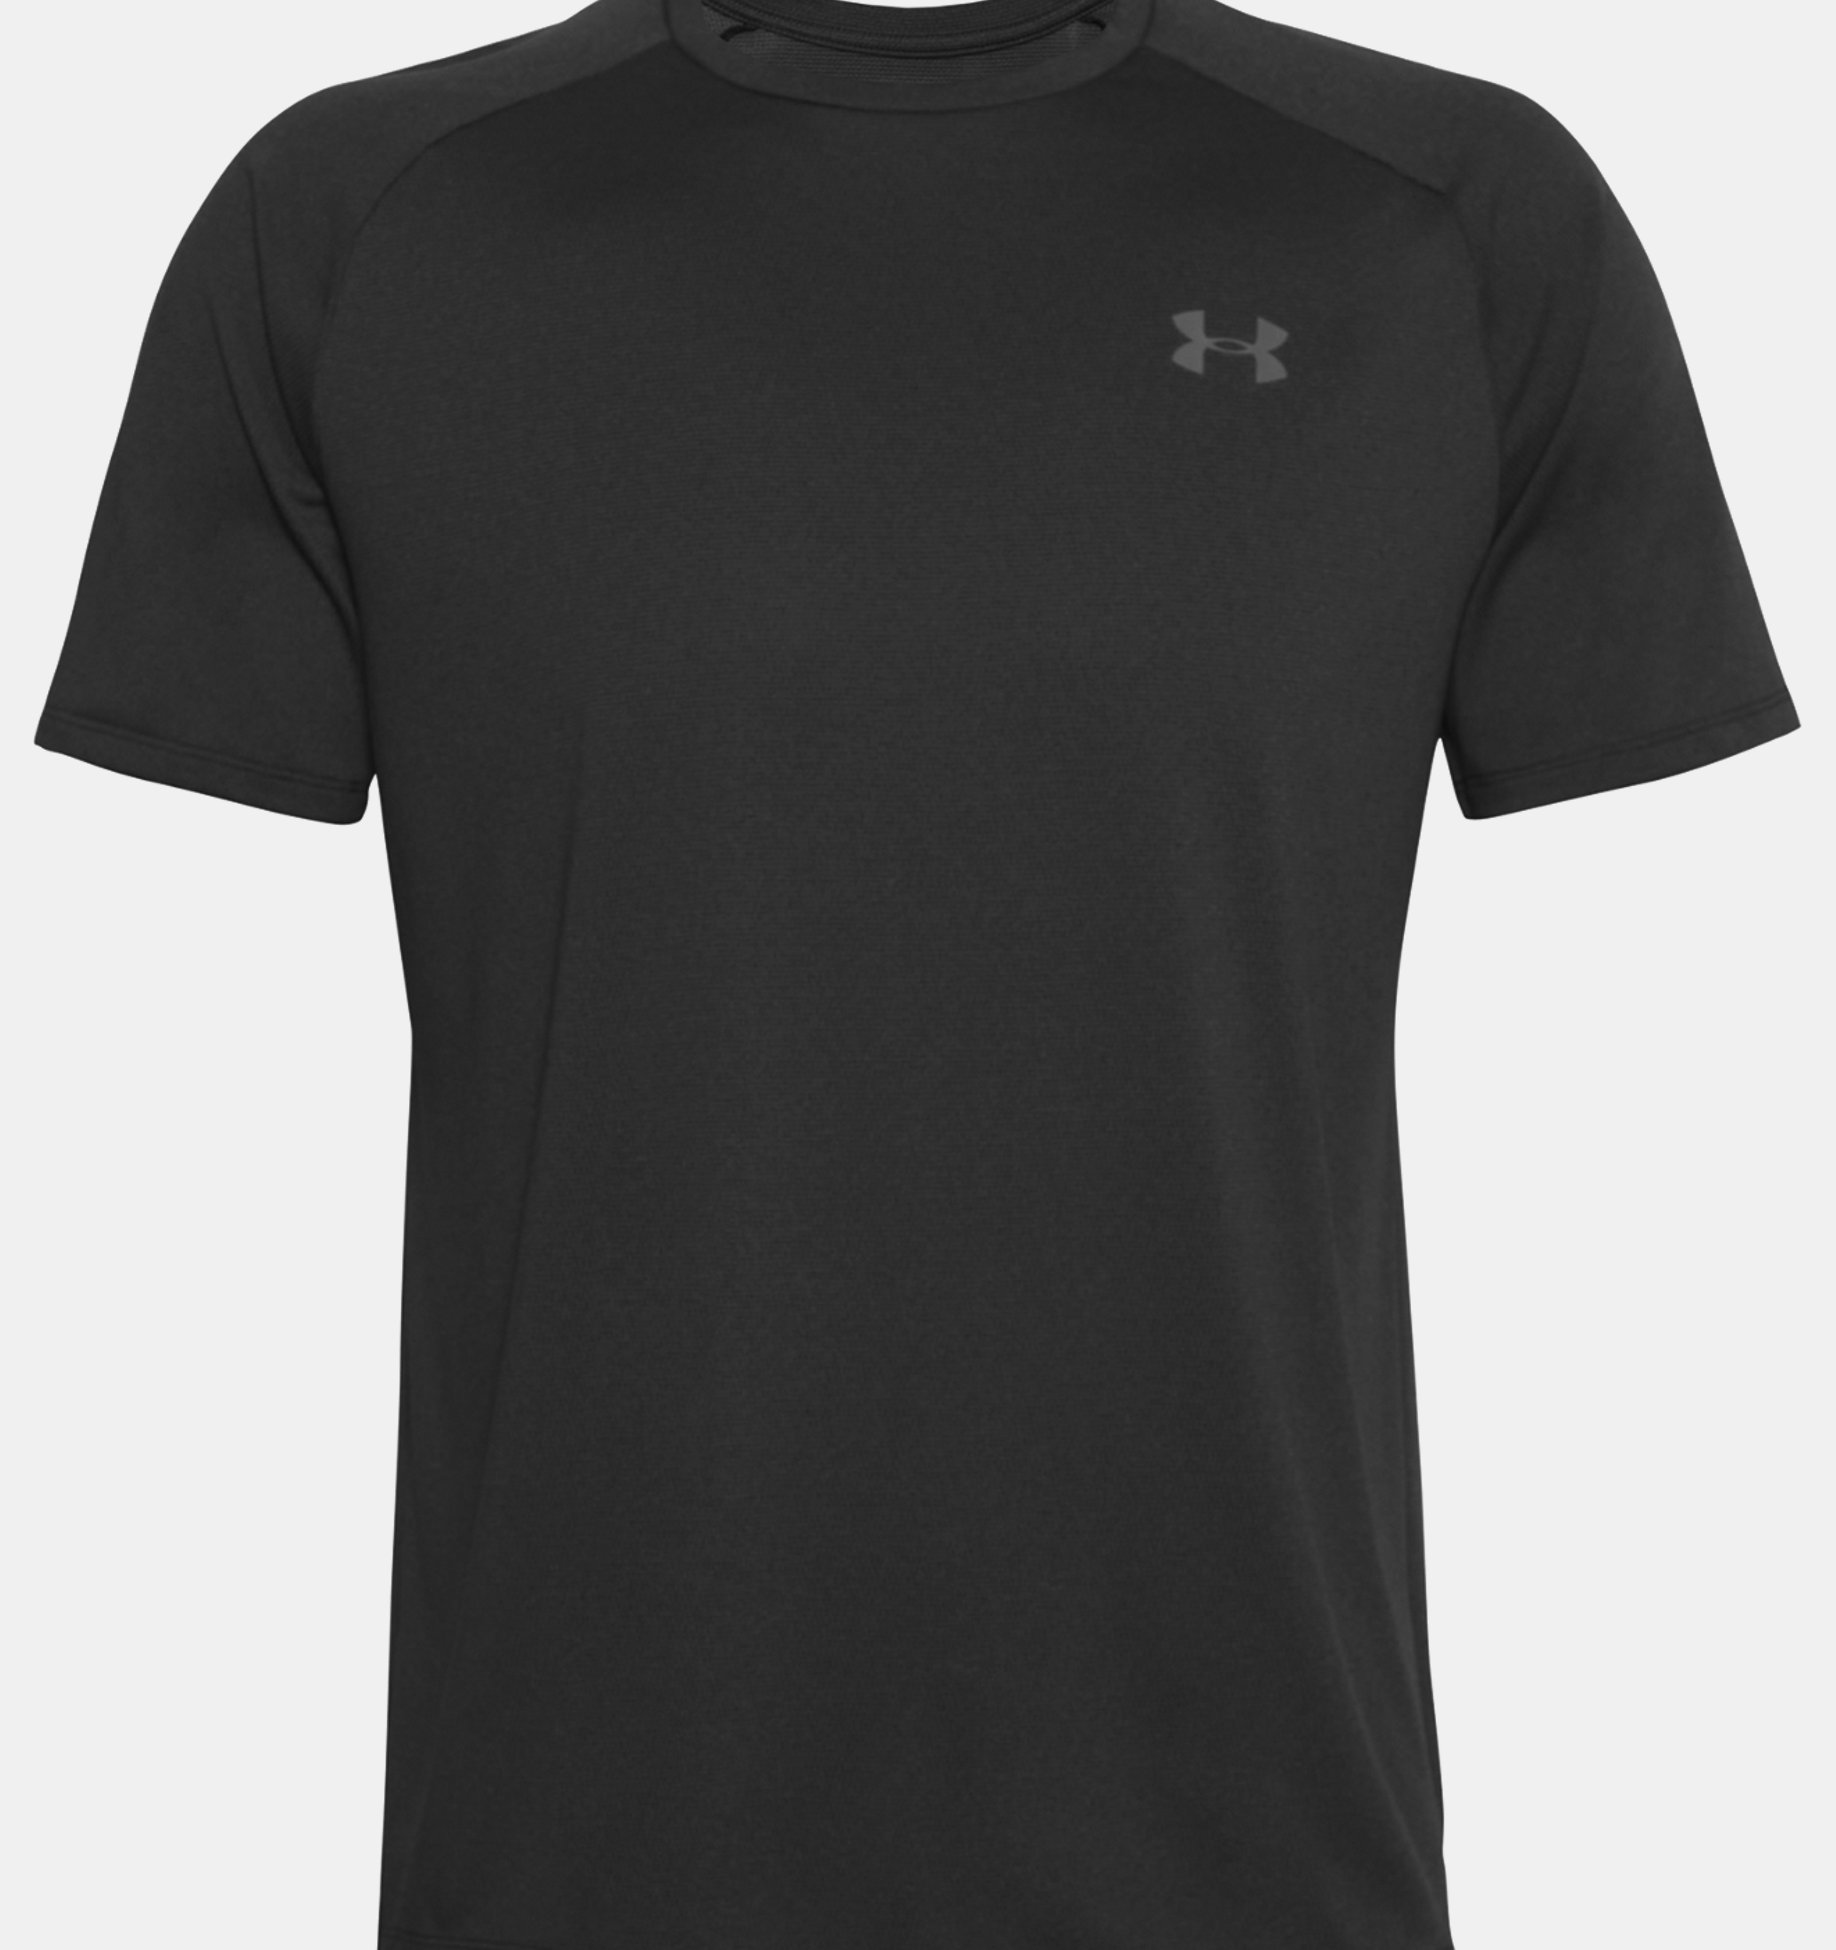 Under Armour Mens Tech 2.0 Short Sleeve T-Shirt Black/White - 002, Medium 